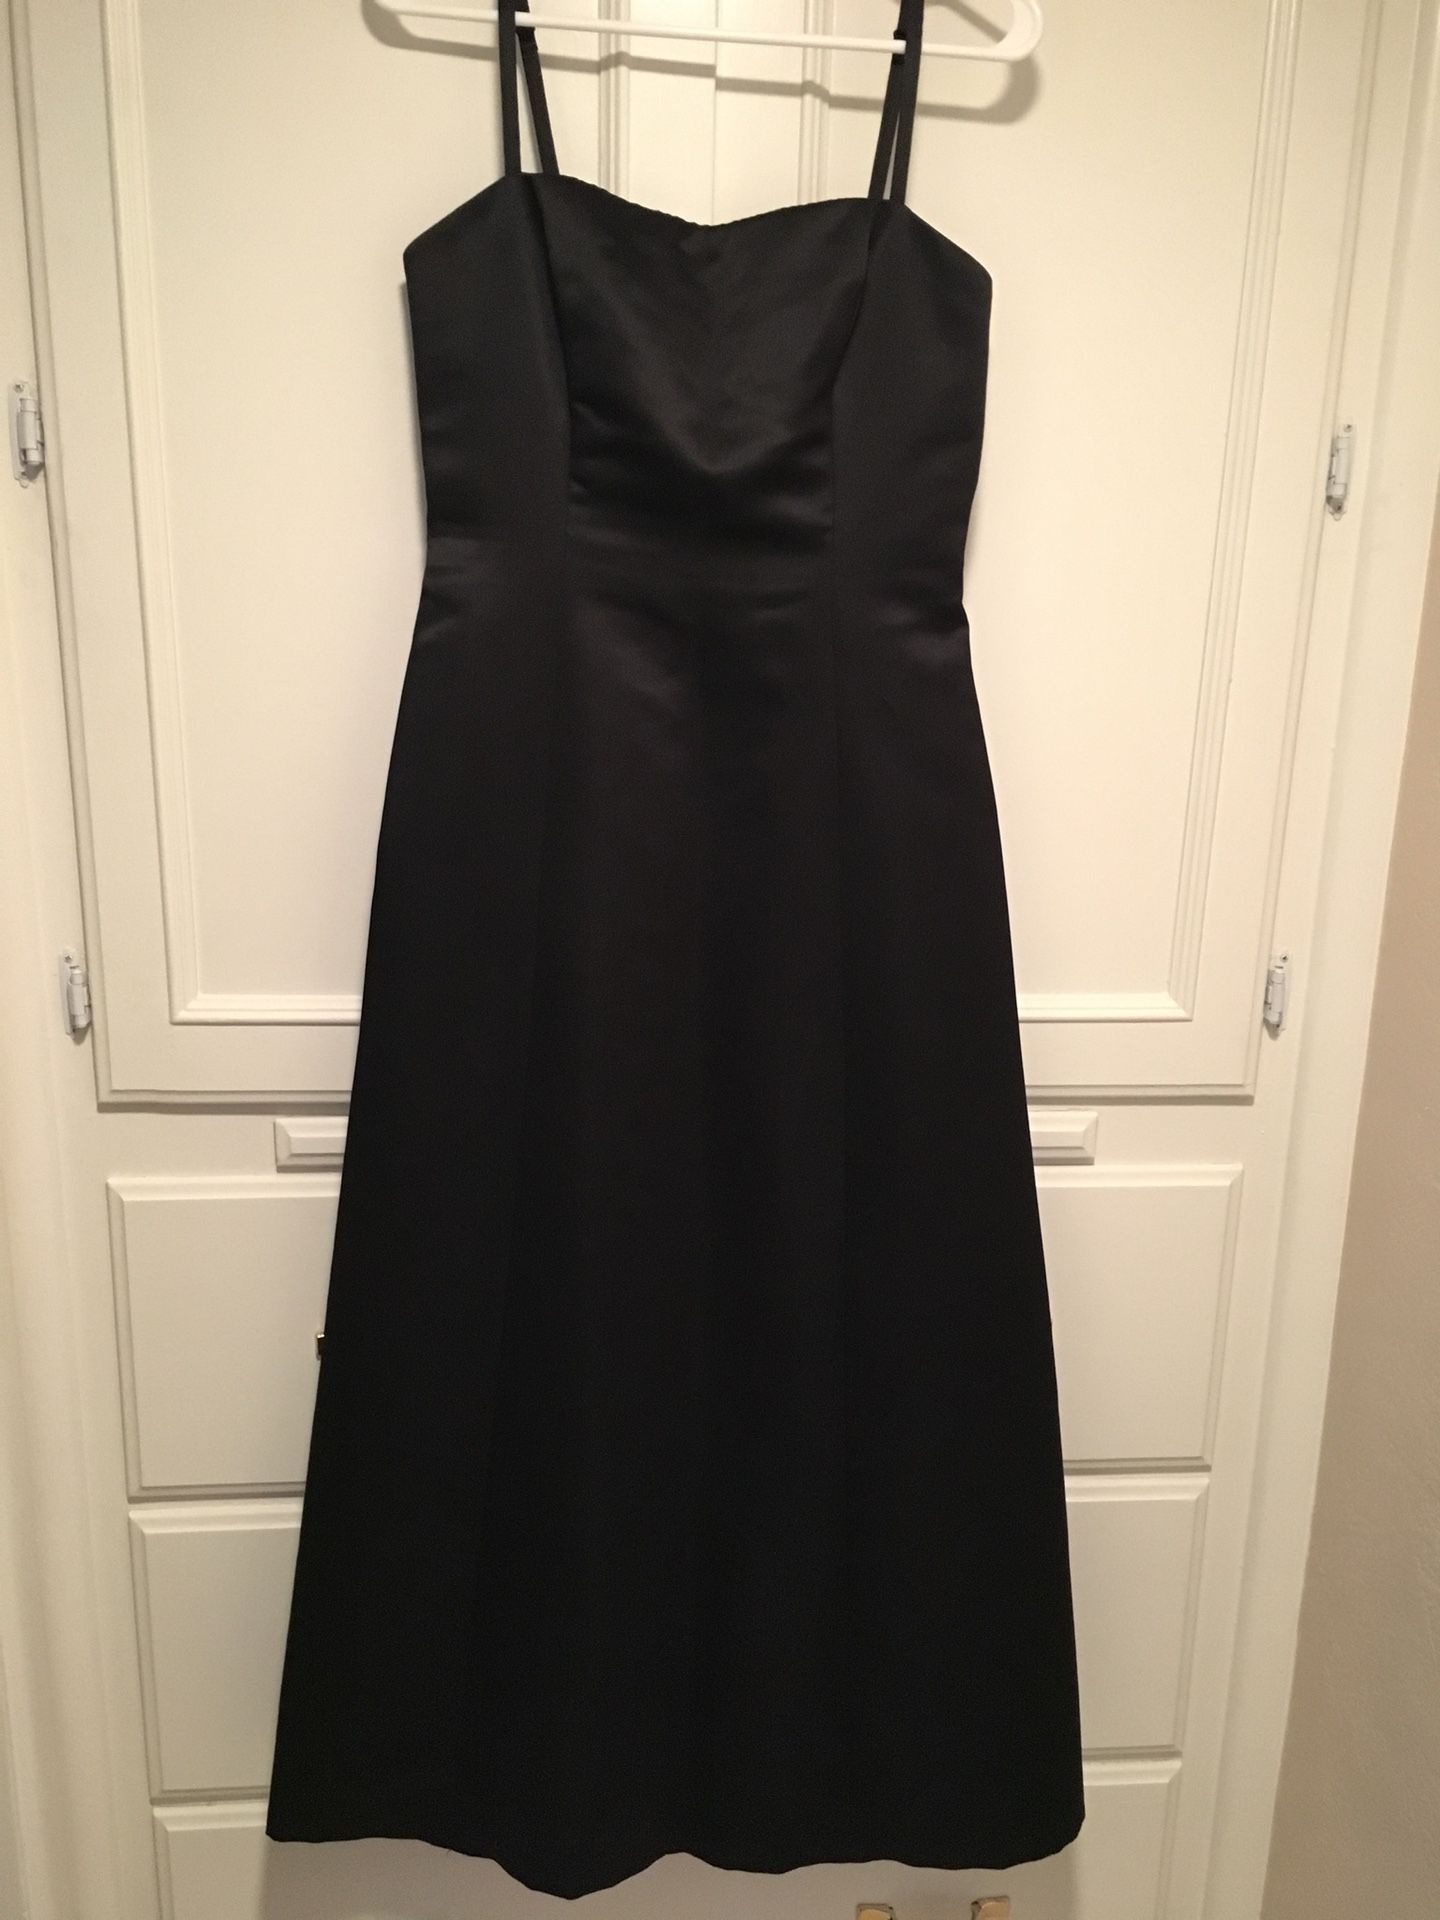 Teenager/woman’s classic black satin dress size 8